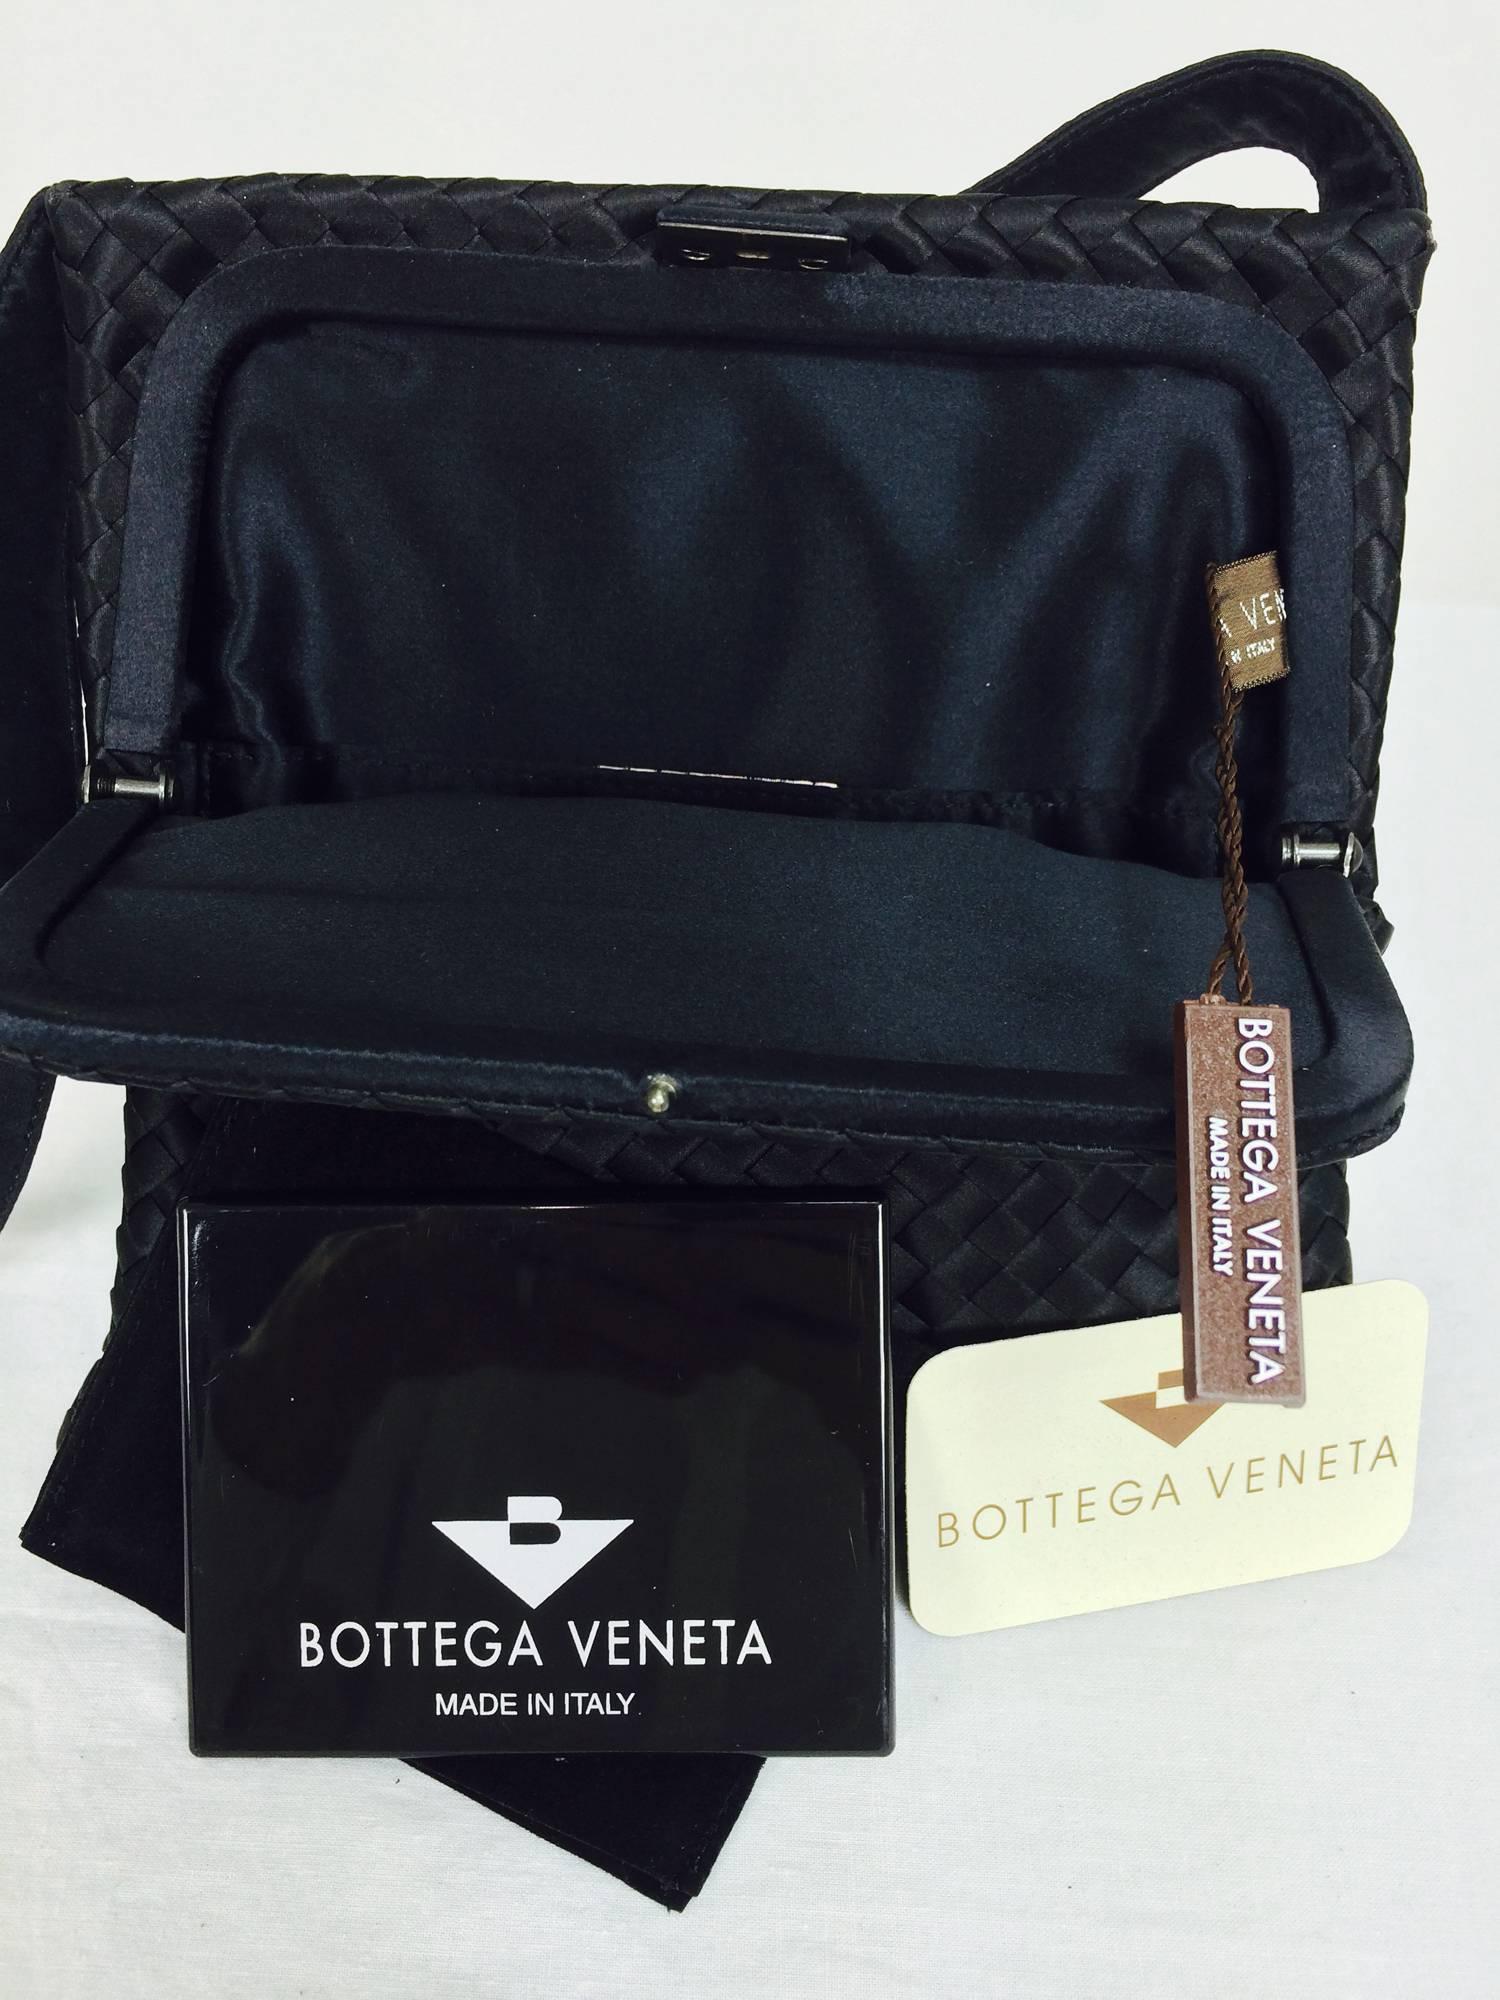 Black Bottega Veneta black silk satin Intrecciato shoulder bag handbag 